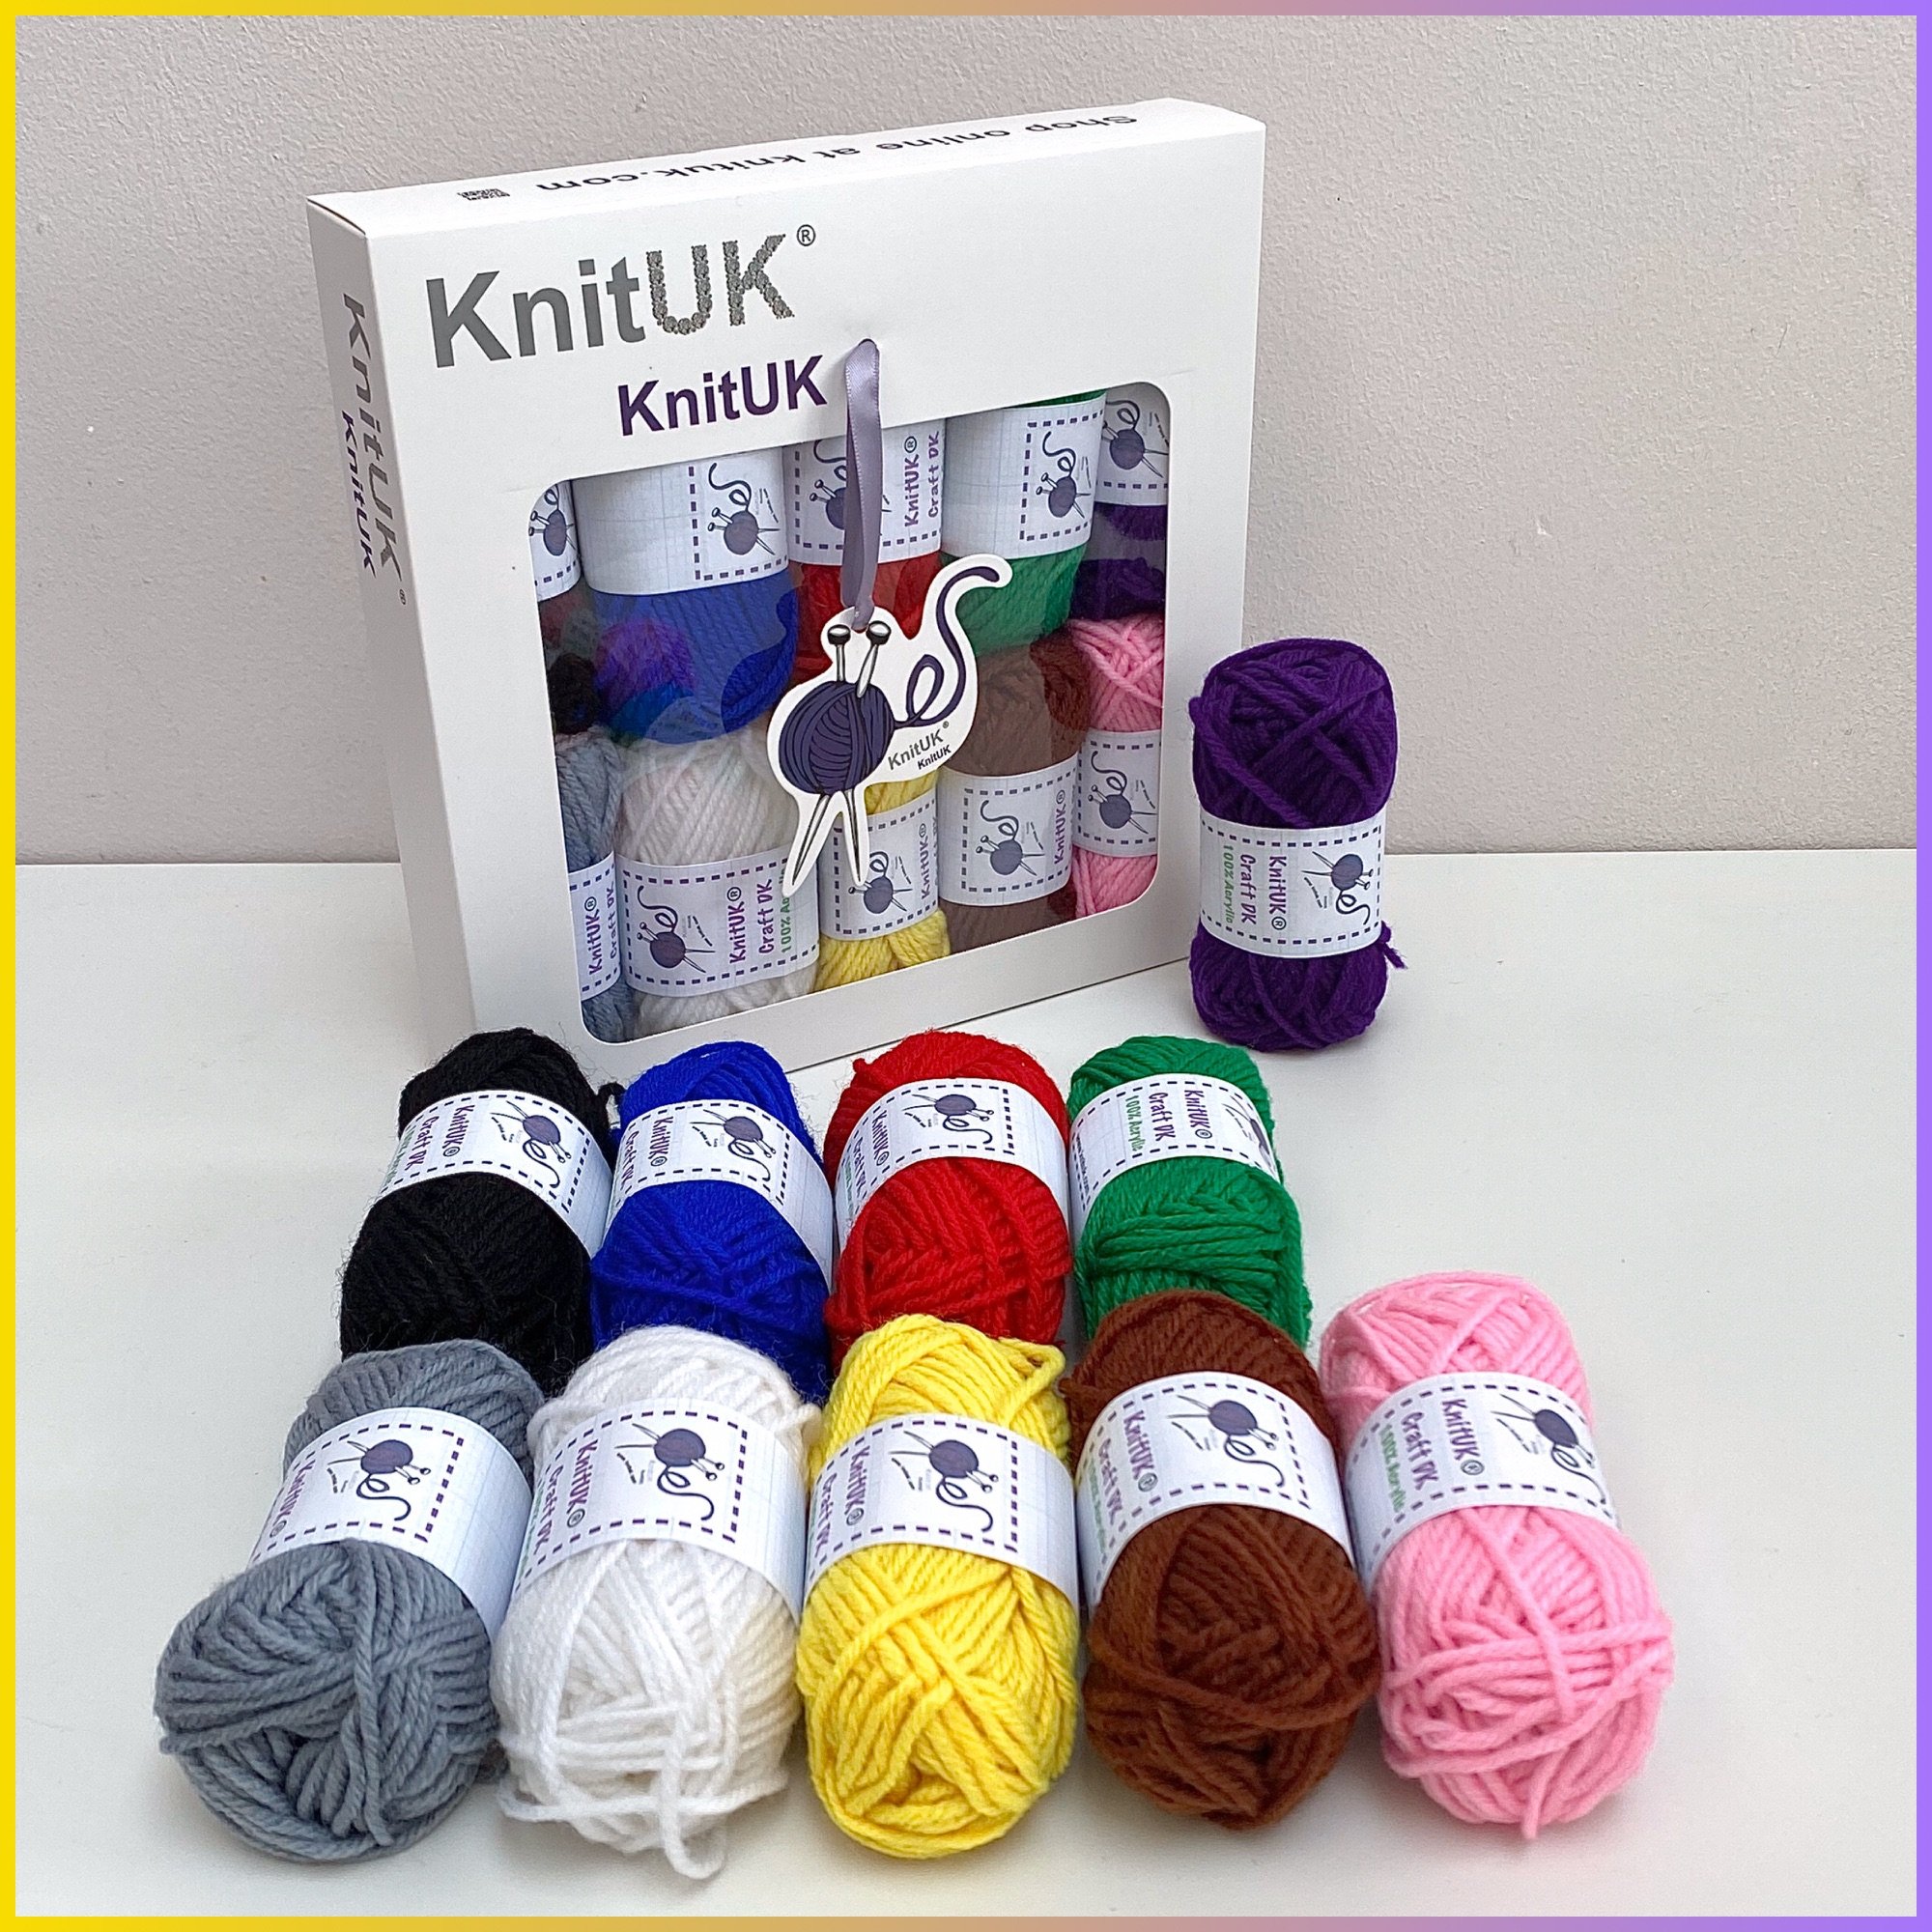 KnitUK Craft DK Yarn box main pic 10 colours purple pink red black blue cho